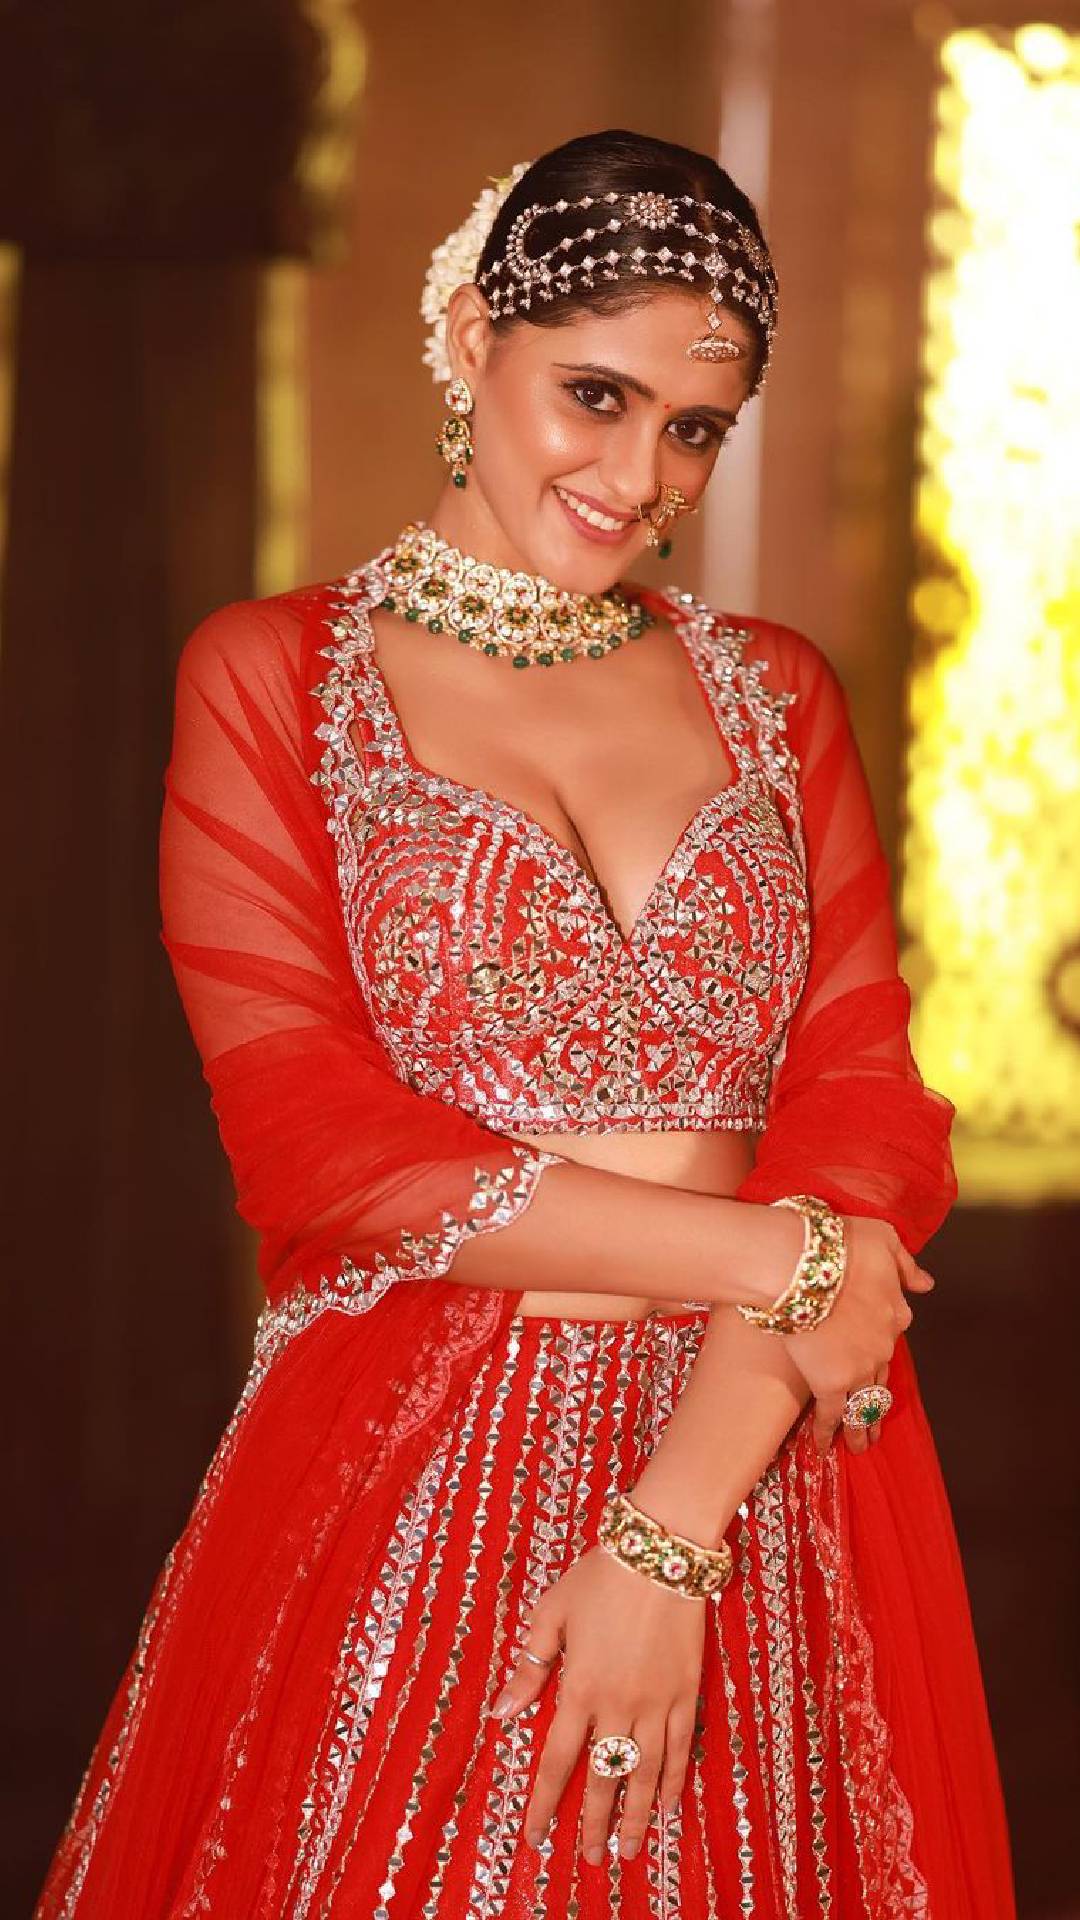 10+ Photos Of Rajasthani Brides That Will Mesmerise You! | Rajasthani bride,  Indian bride, Indian bridal makeup